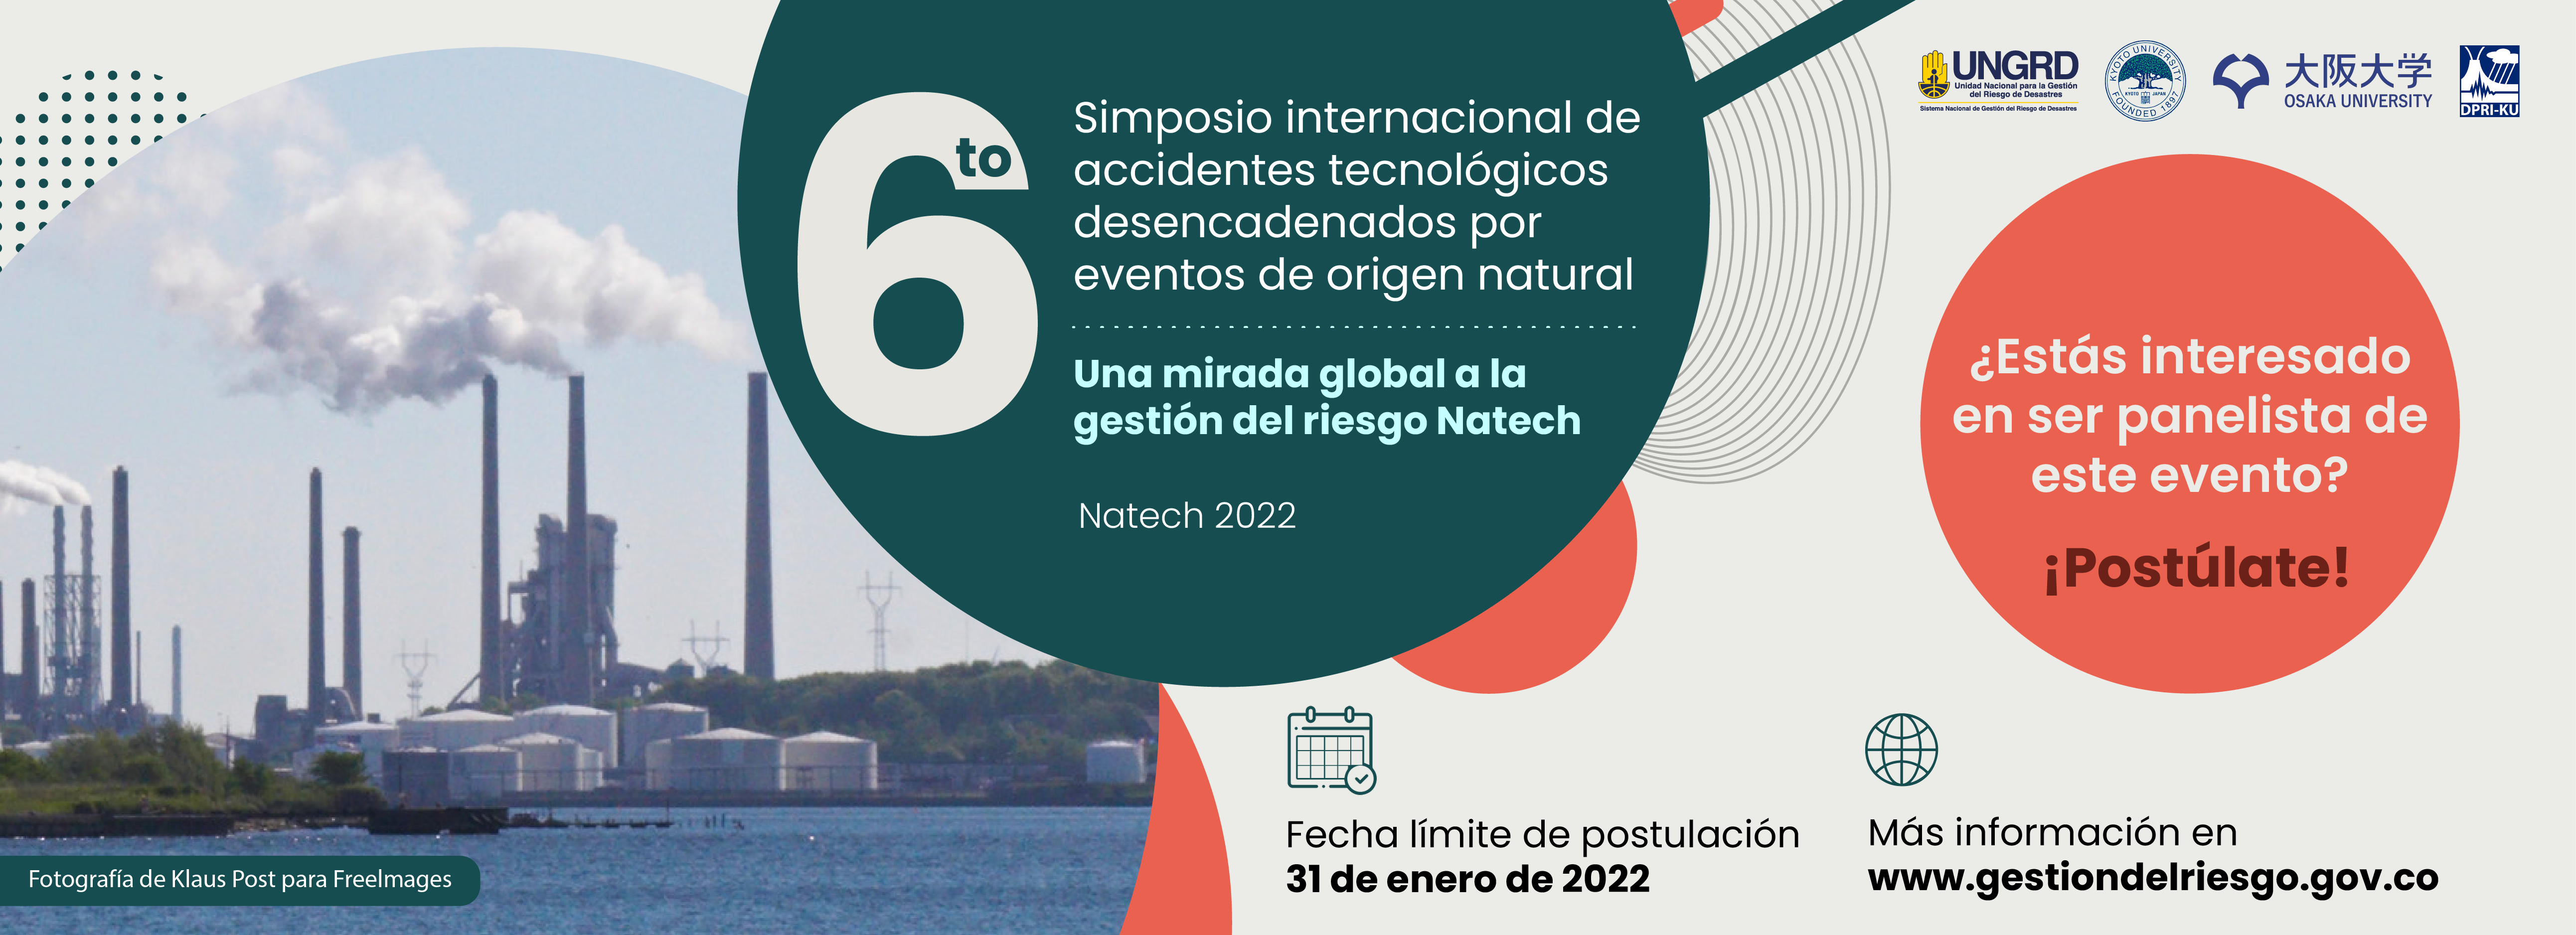 6to Simposio internacional de accidentes tecnológicos desencadenados por eventos de origen natural.